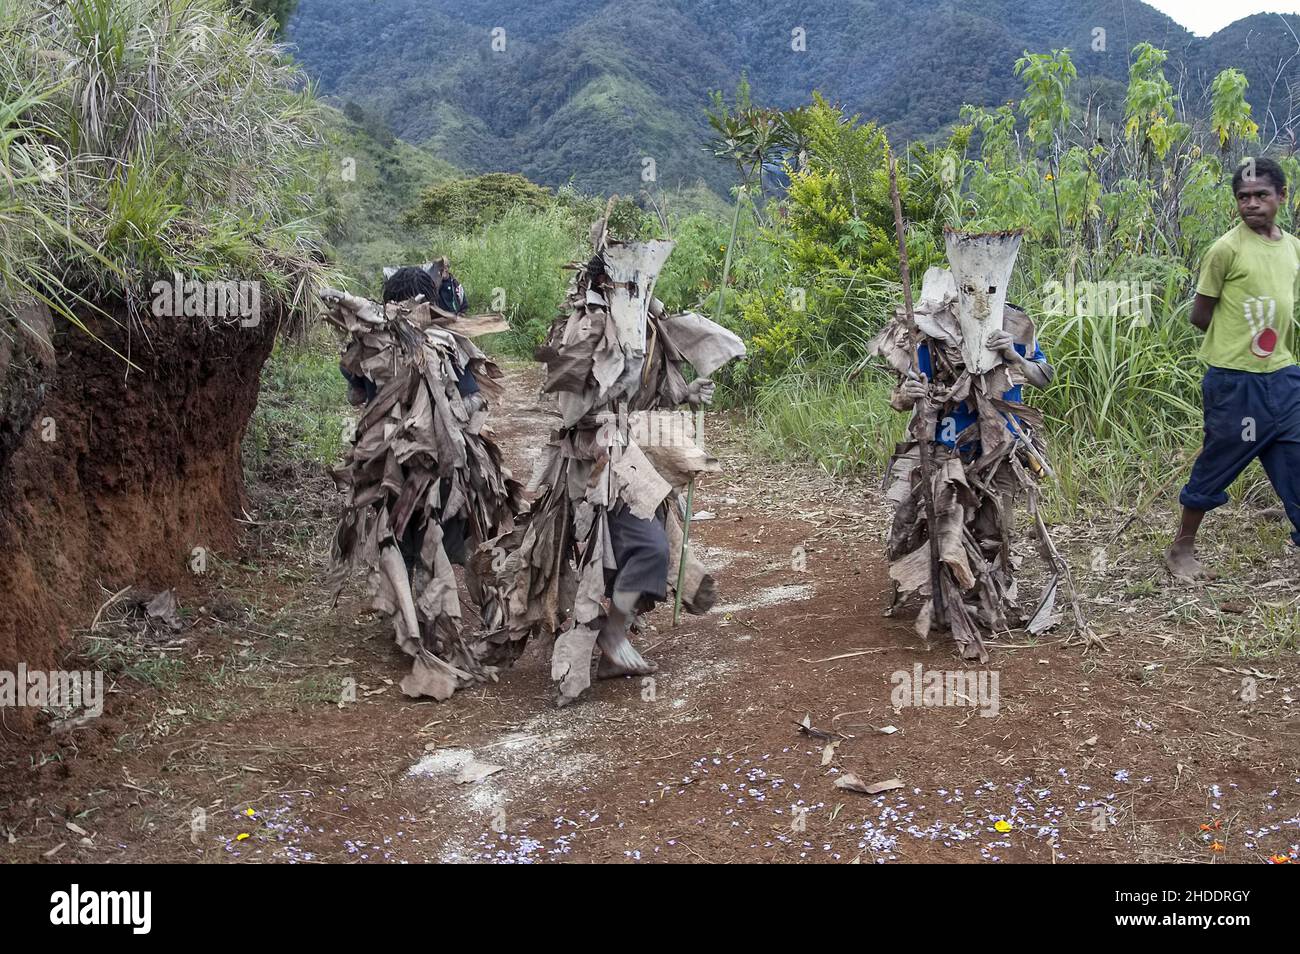 Papua New Guinea; Eastern Highlands; Goroka; Namta; Papuans wearing masks perform a ritual dance. Papuas in Masken vollführen einen rituellen Tanz. Stock Photo